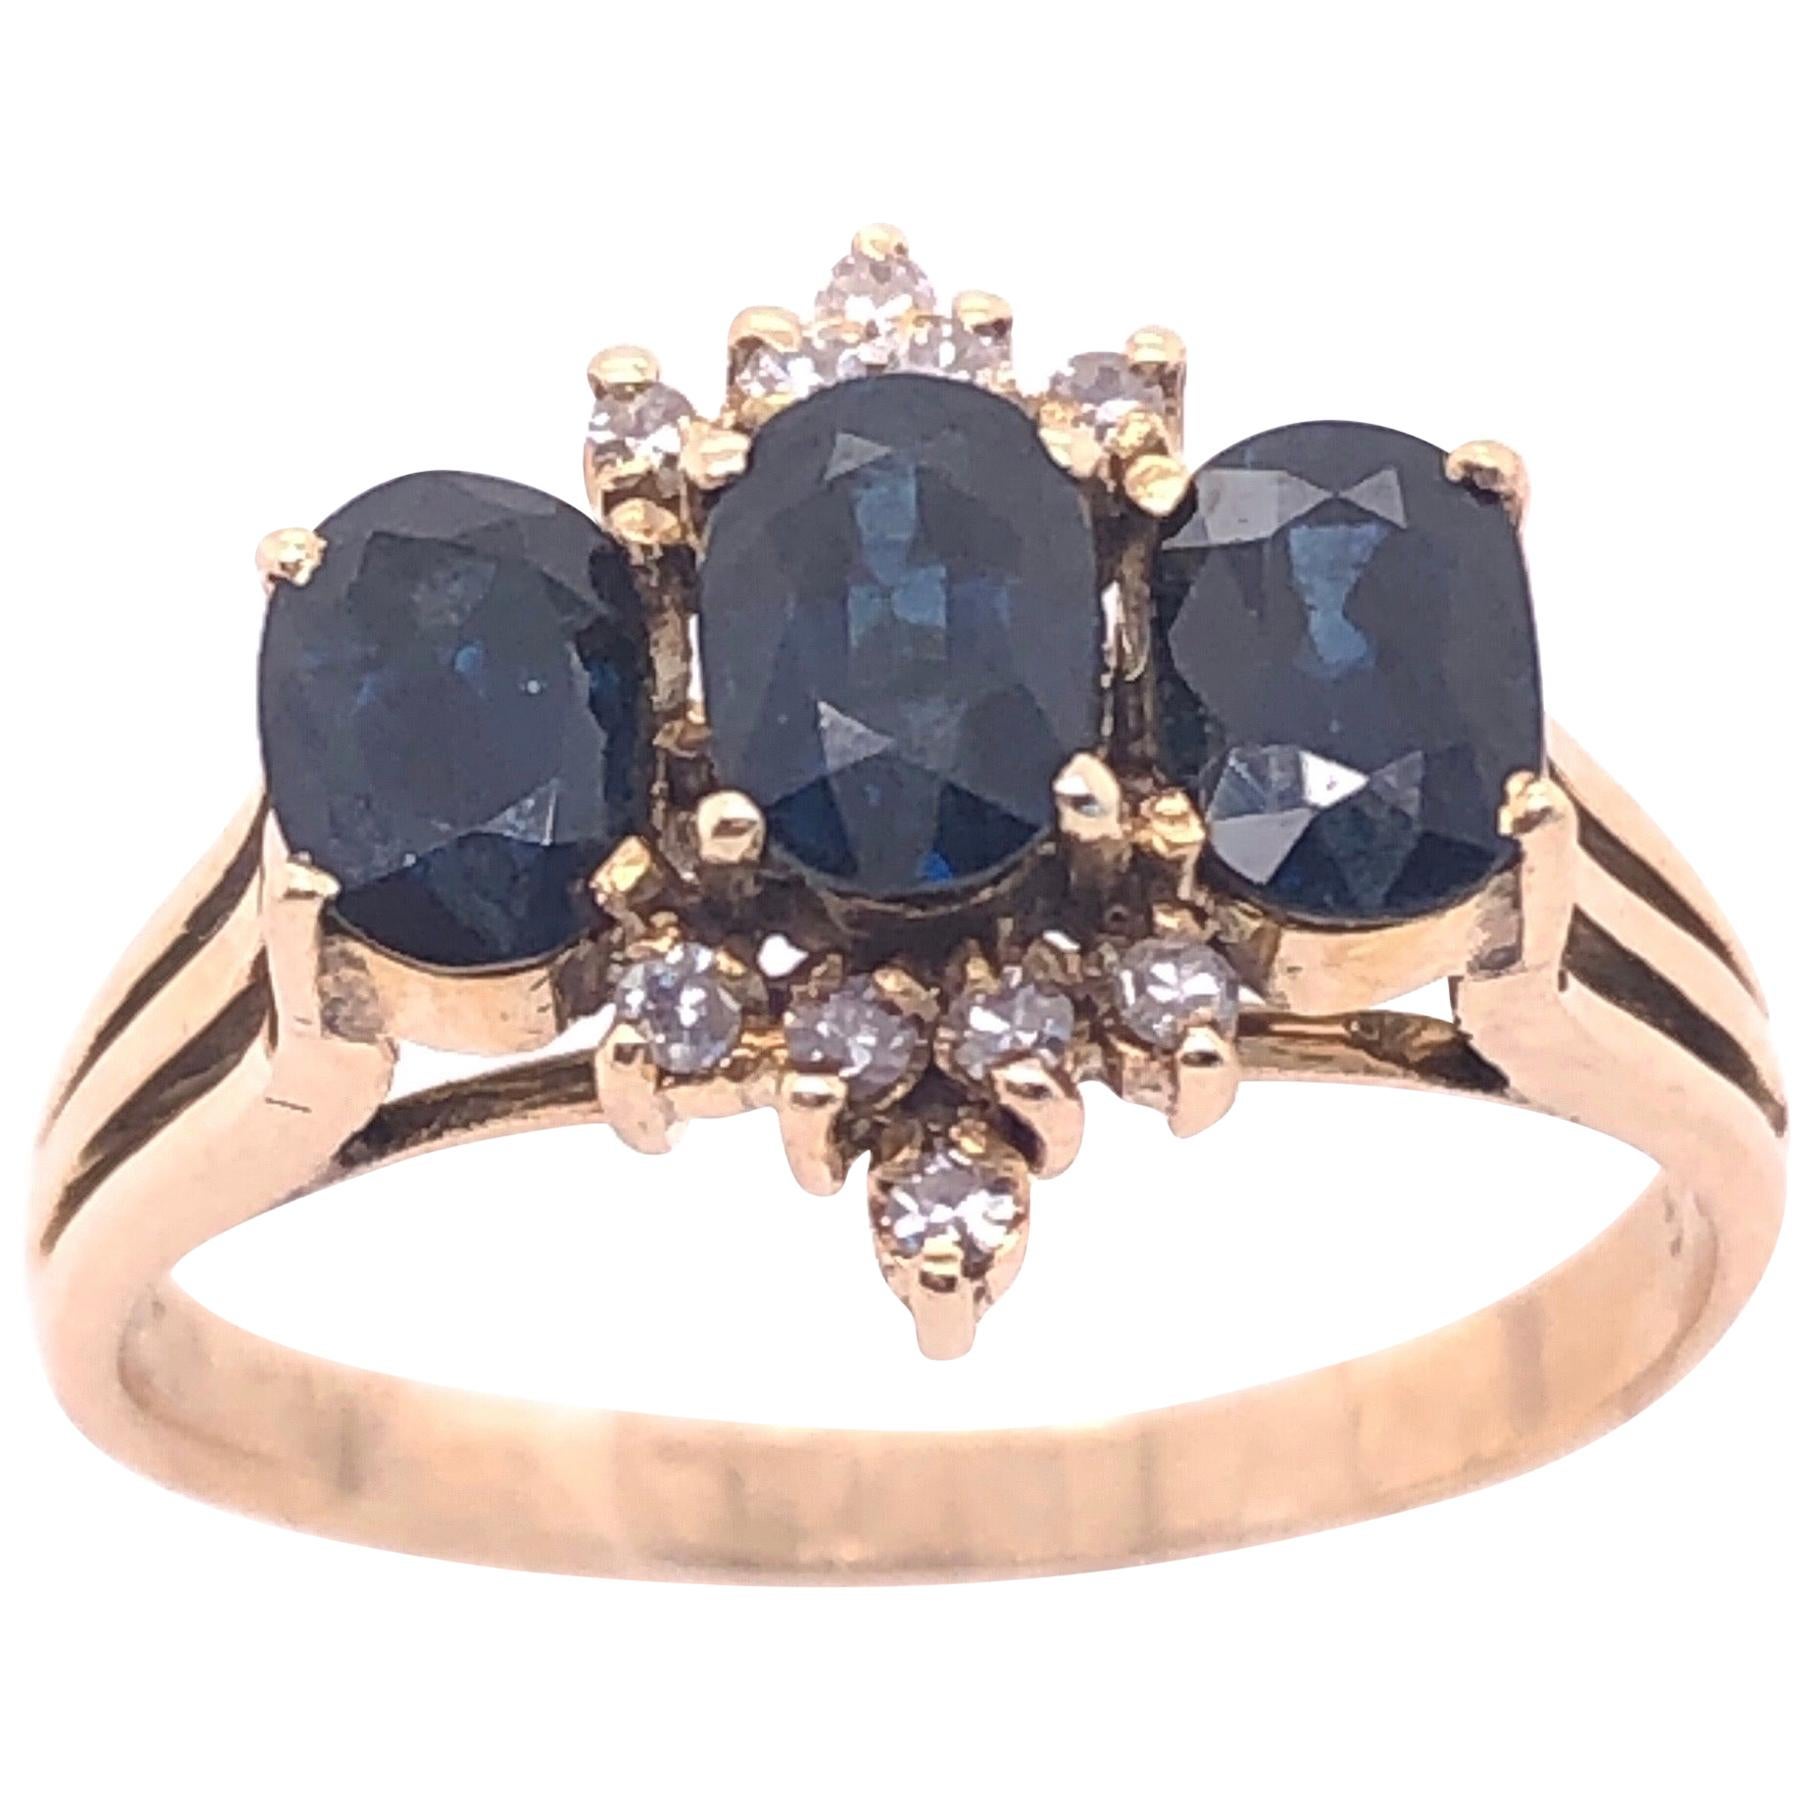 14 Karat Yellow Gold Three-Stone Sapphire Ring with Diamond Accents